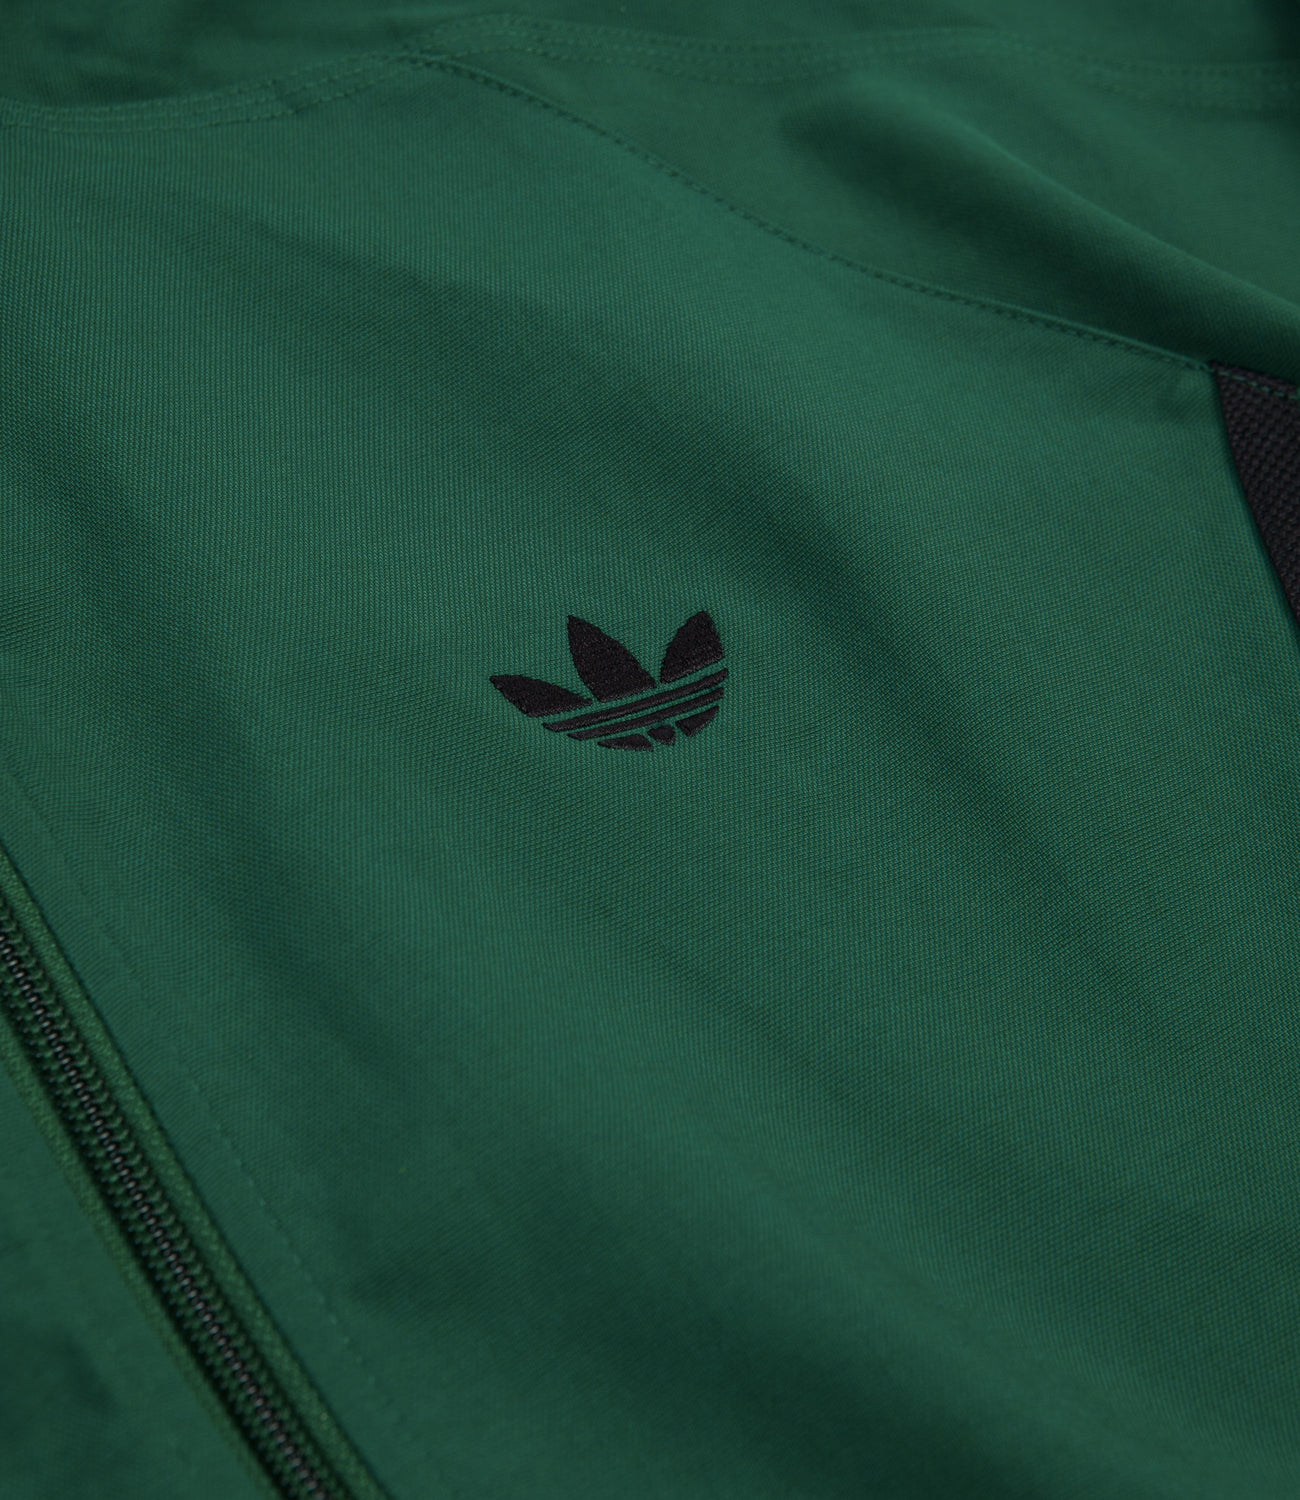 Adidas Workshop Windbreaker Jacket - Collegiate Green / Black | Flatspot